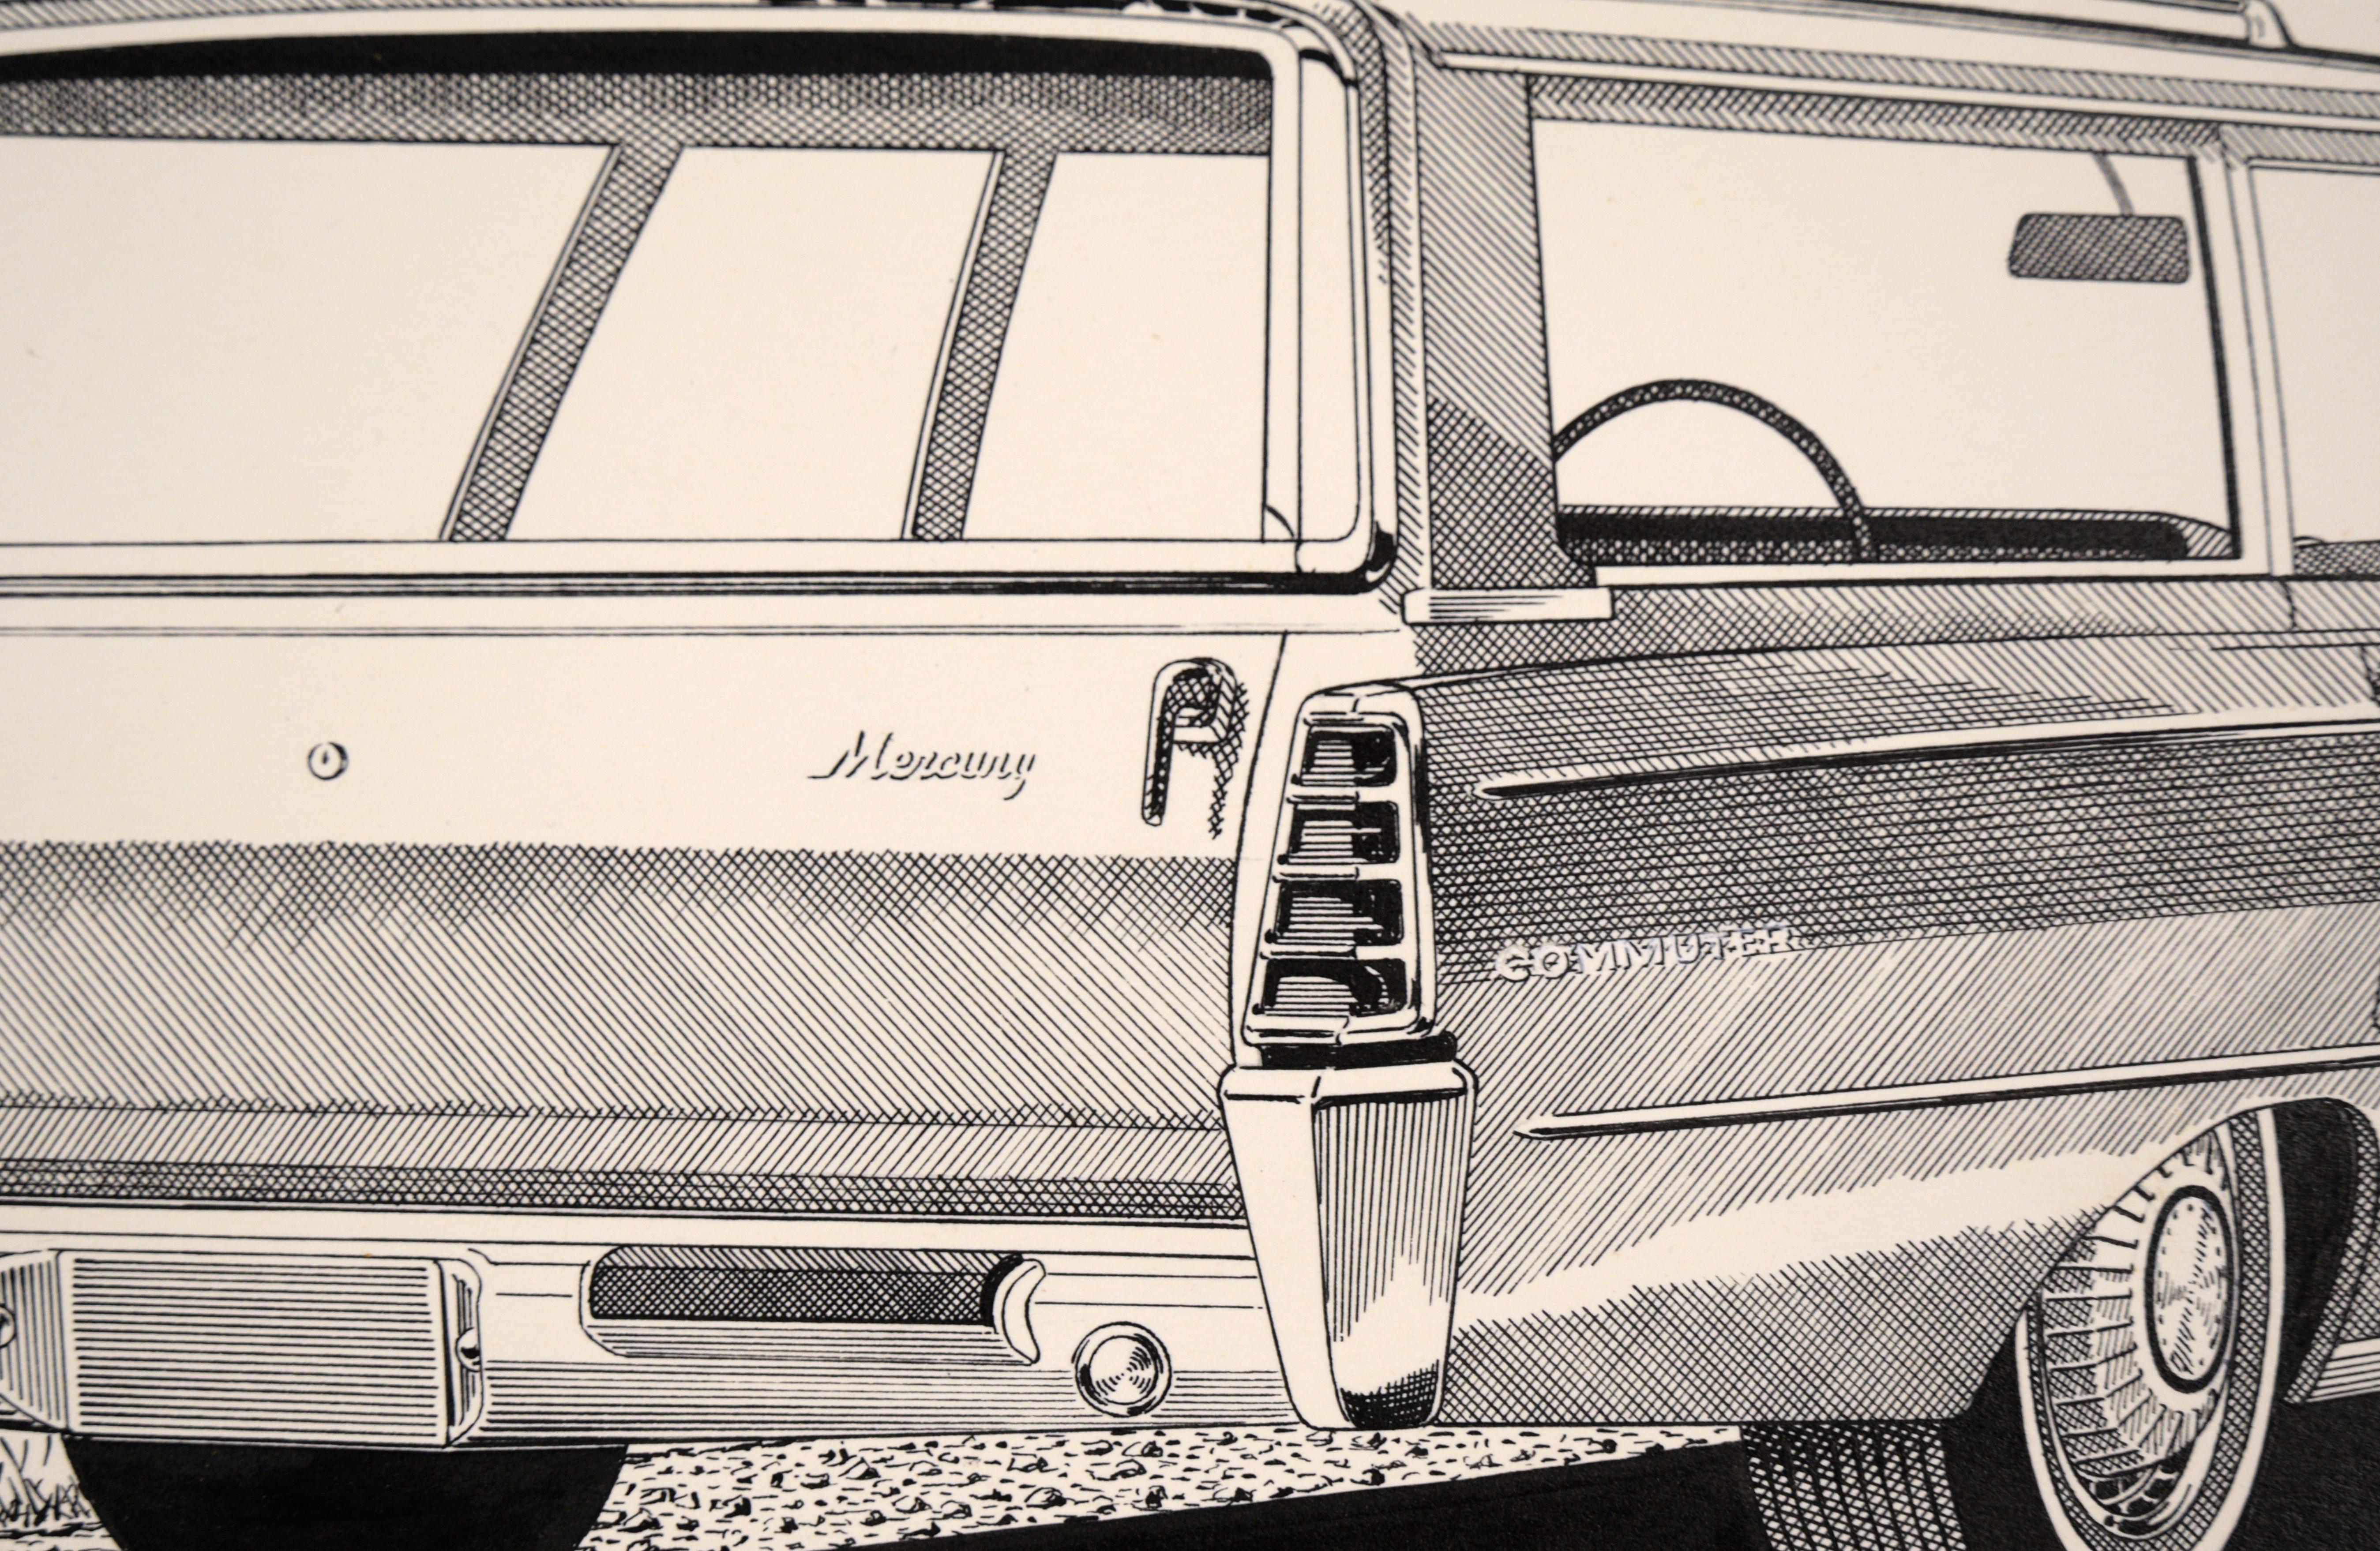 1967 mercury station wagon